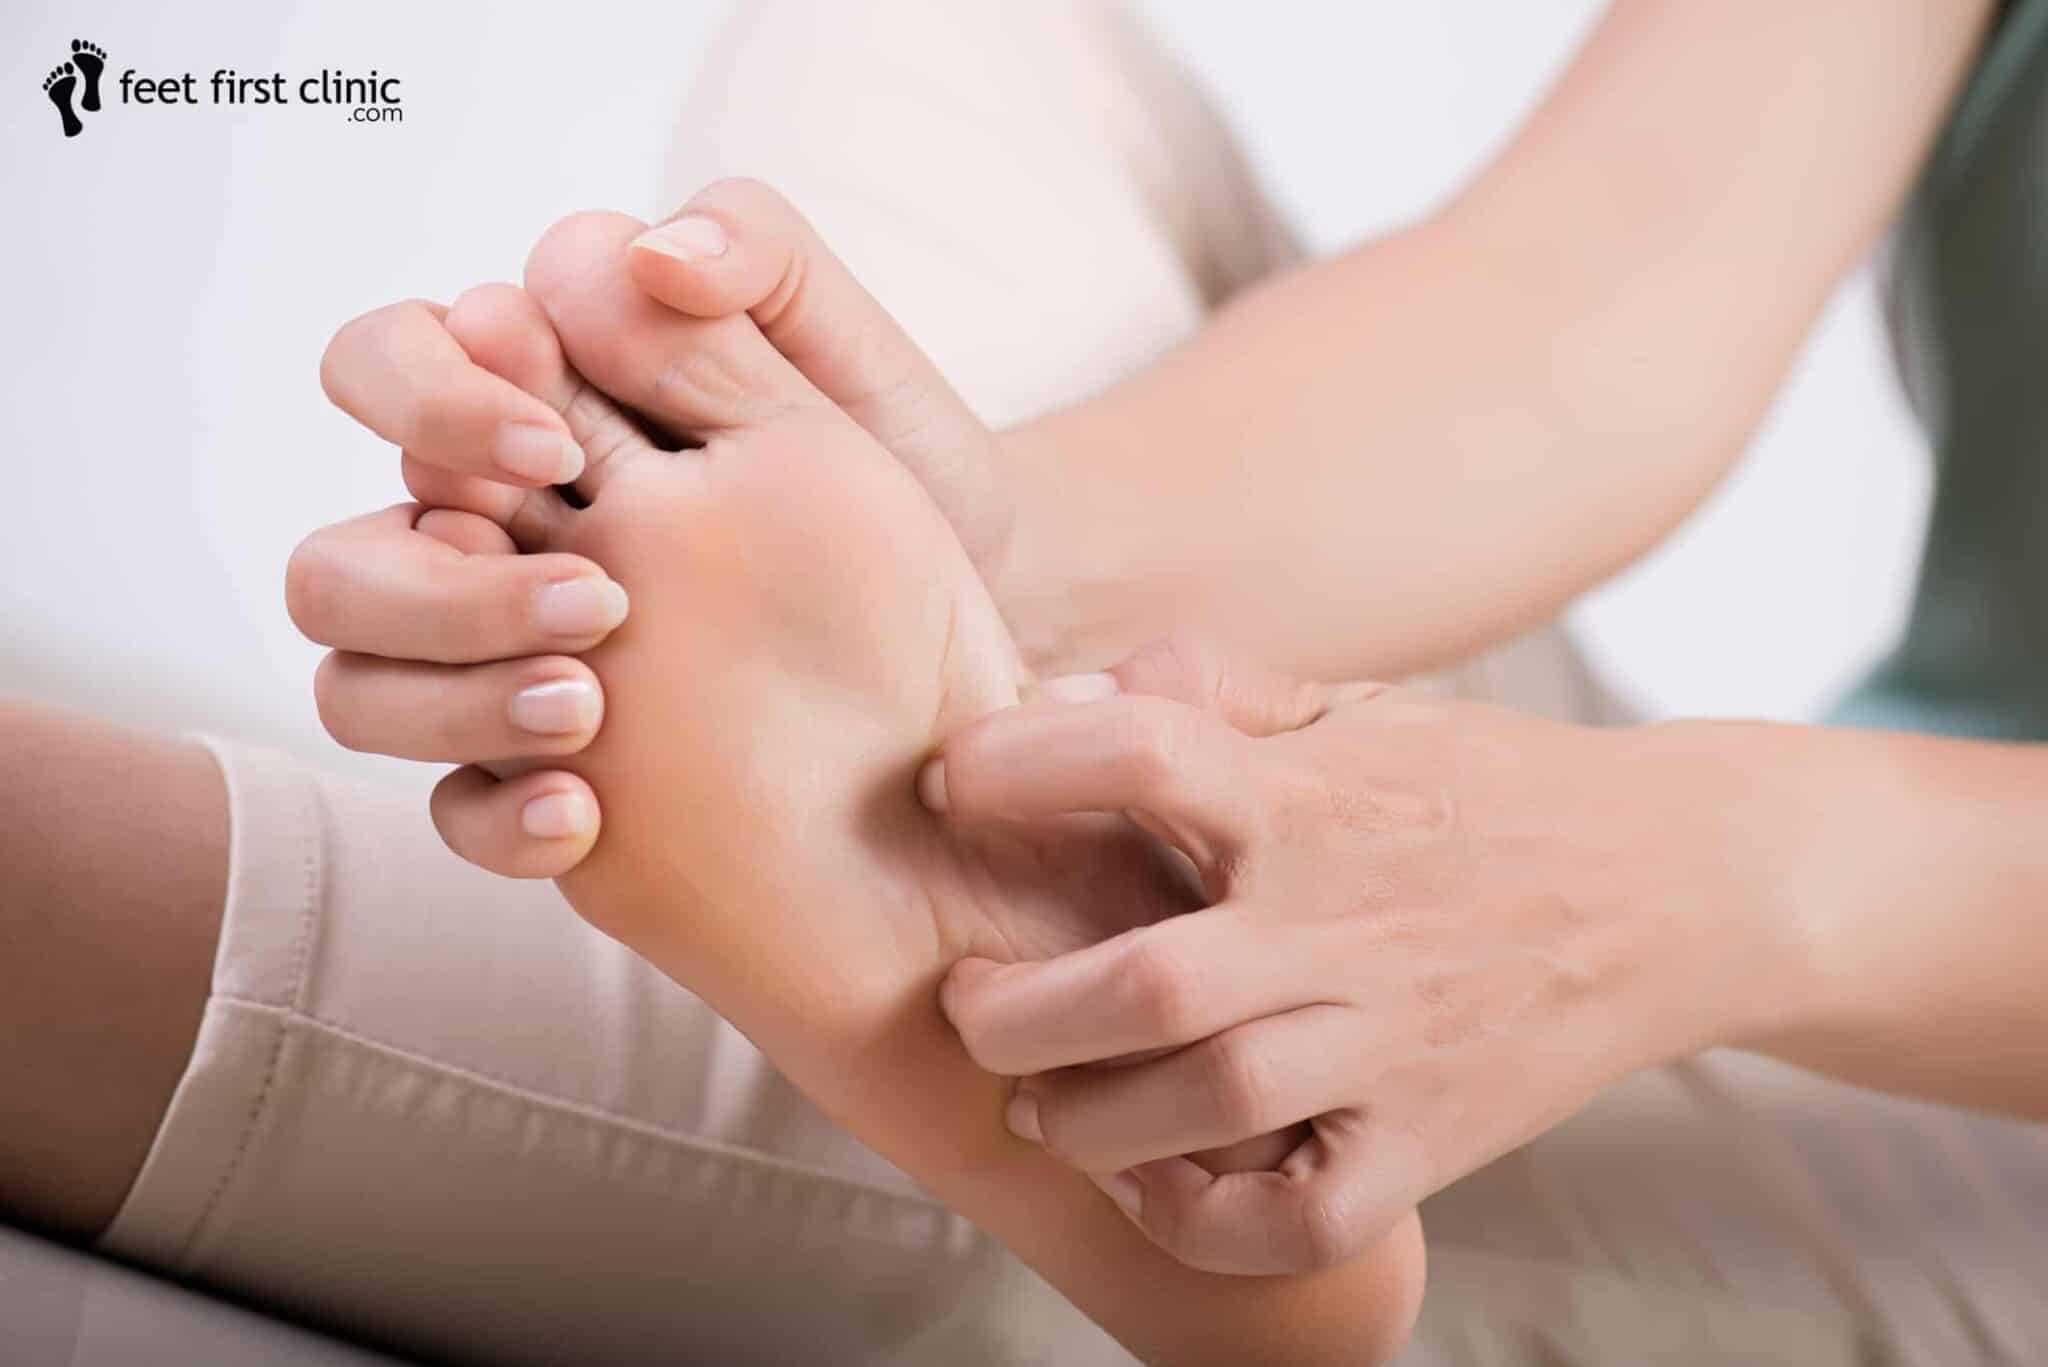 Yoga Sports GYM Five Toe Separator Socks Alignment Pain Health Massage  Socks, Prevent Foot Cramps, One Pair